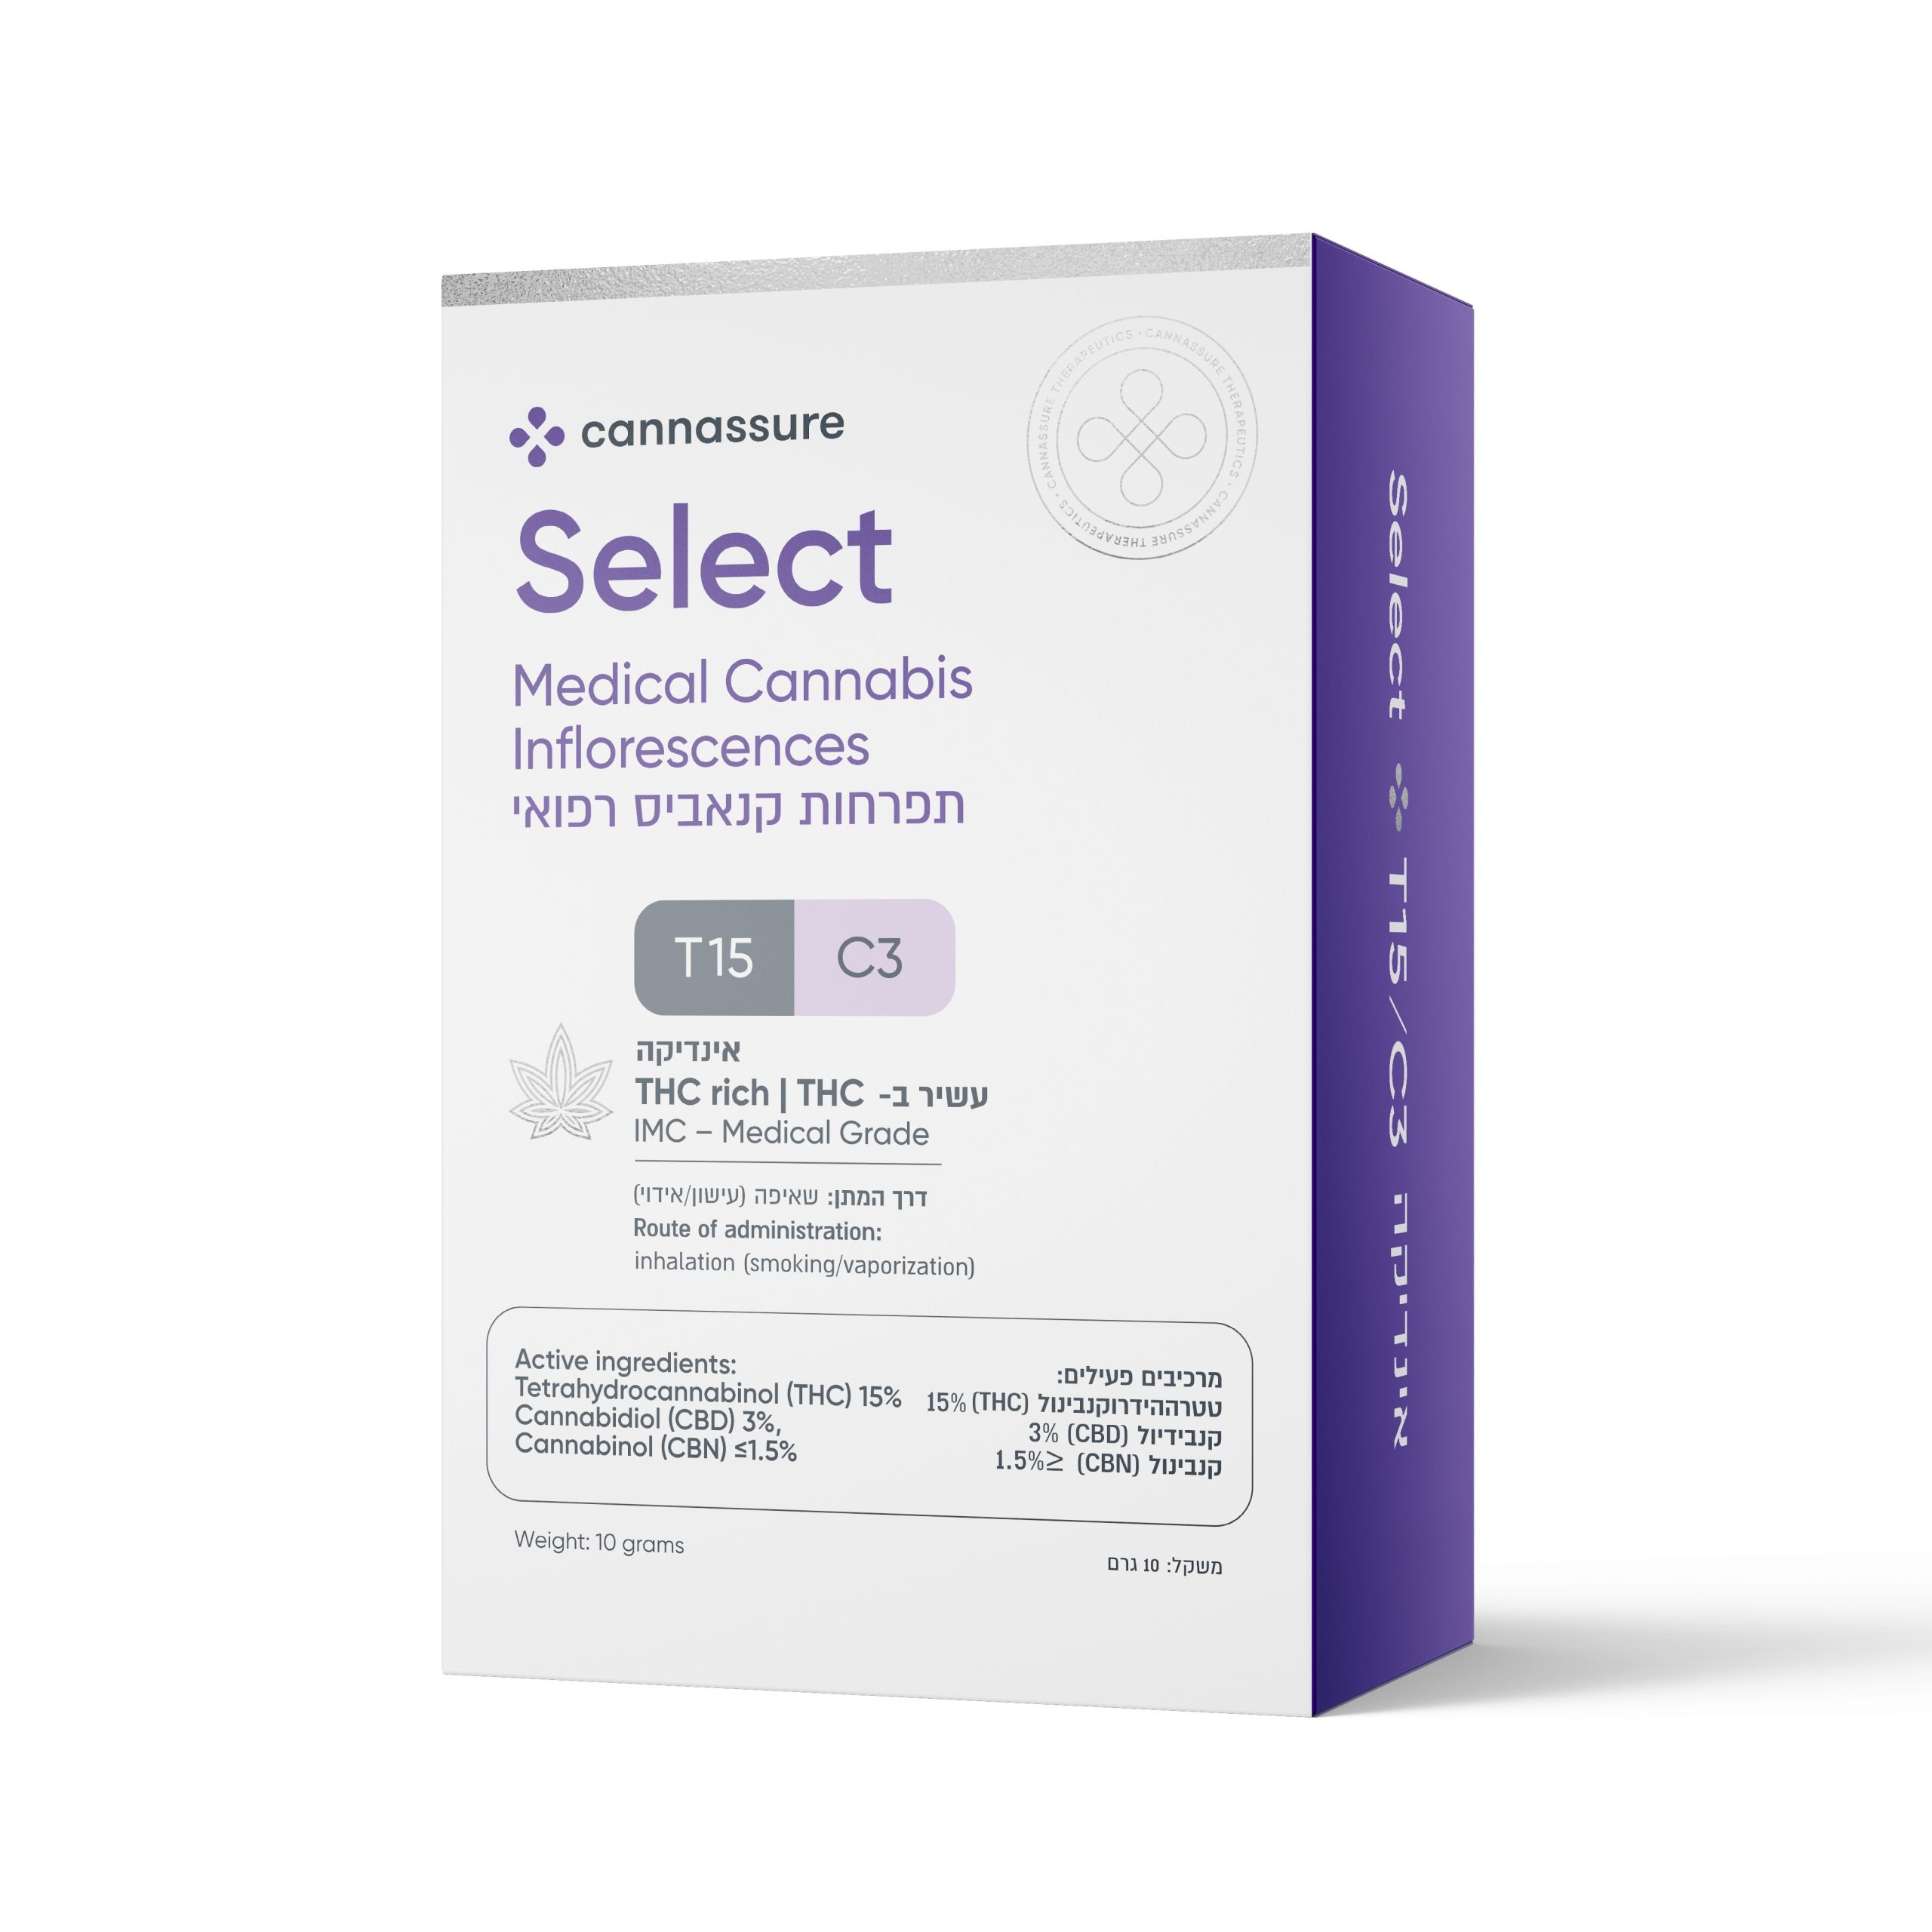 Select Inflorescences T20/C4 Sativa